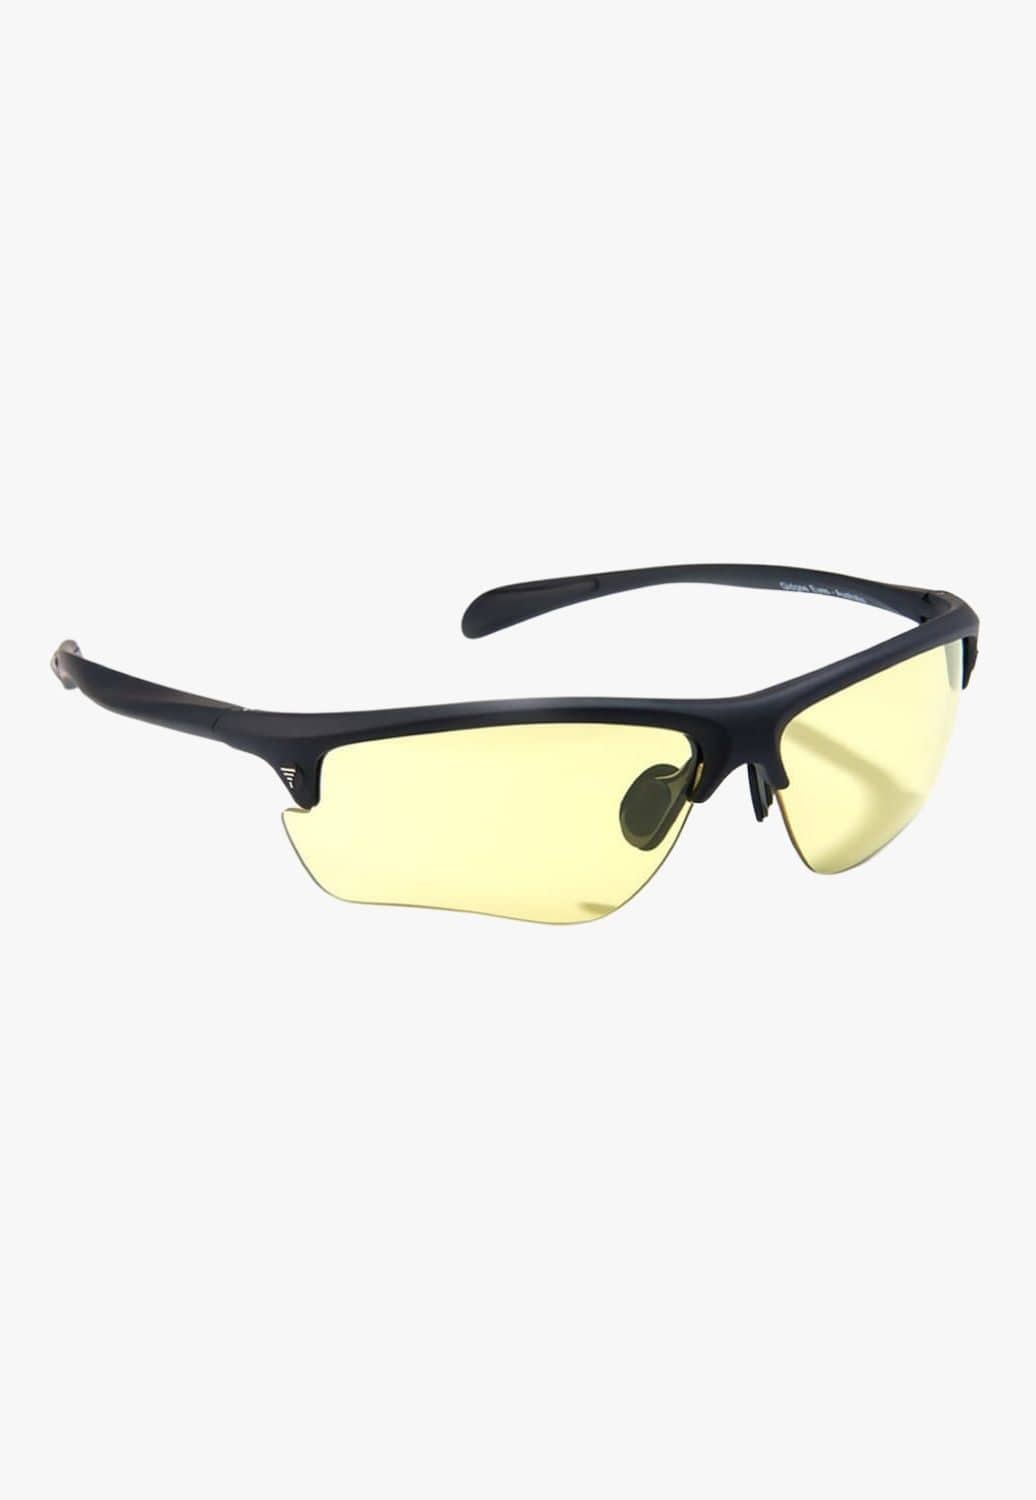 Gidgee Eyes ACCESSORIES-Sunglasses OSFA / Yellow Gidgee Eyes Elite Comp Sunglasses